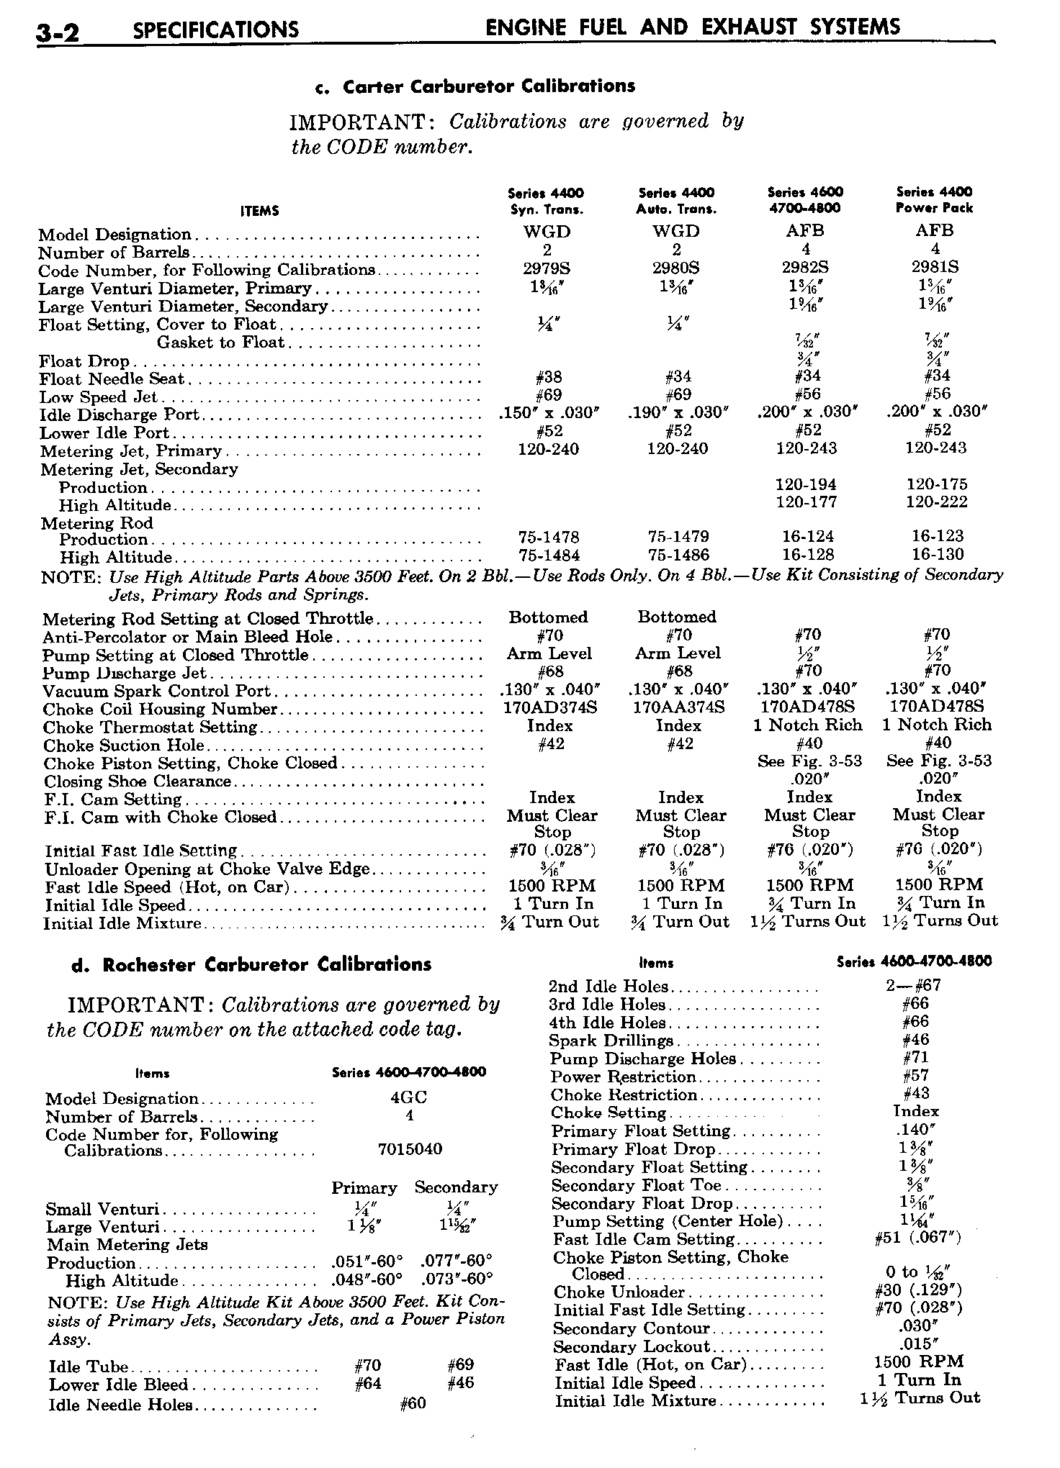 n_04 1960 Buick Shop Manual - Engine Fuel & Exhaust-002-002.jpg